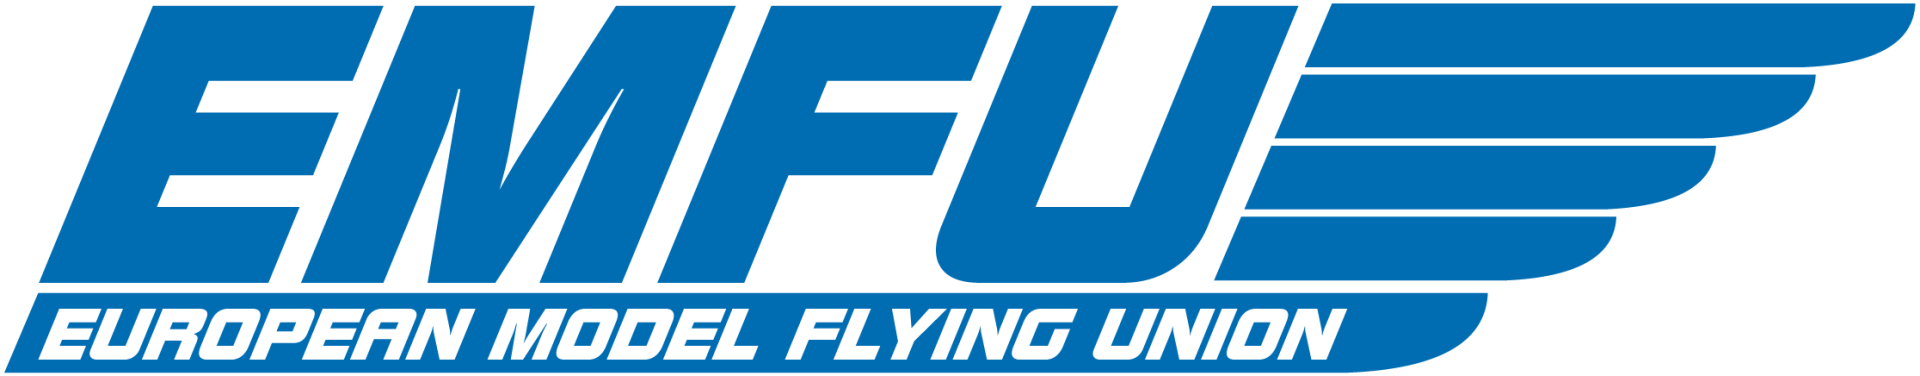 EMFU Logo.png